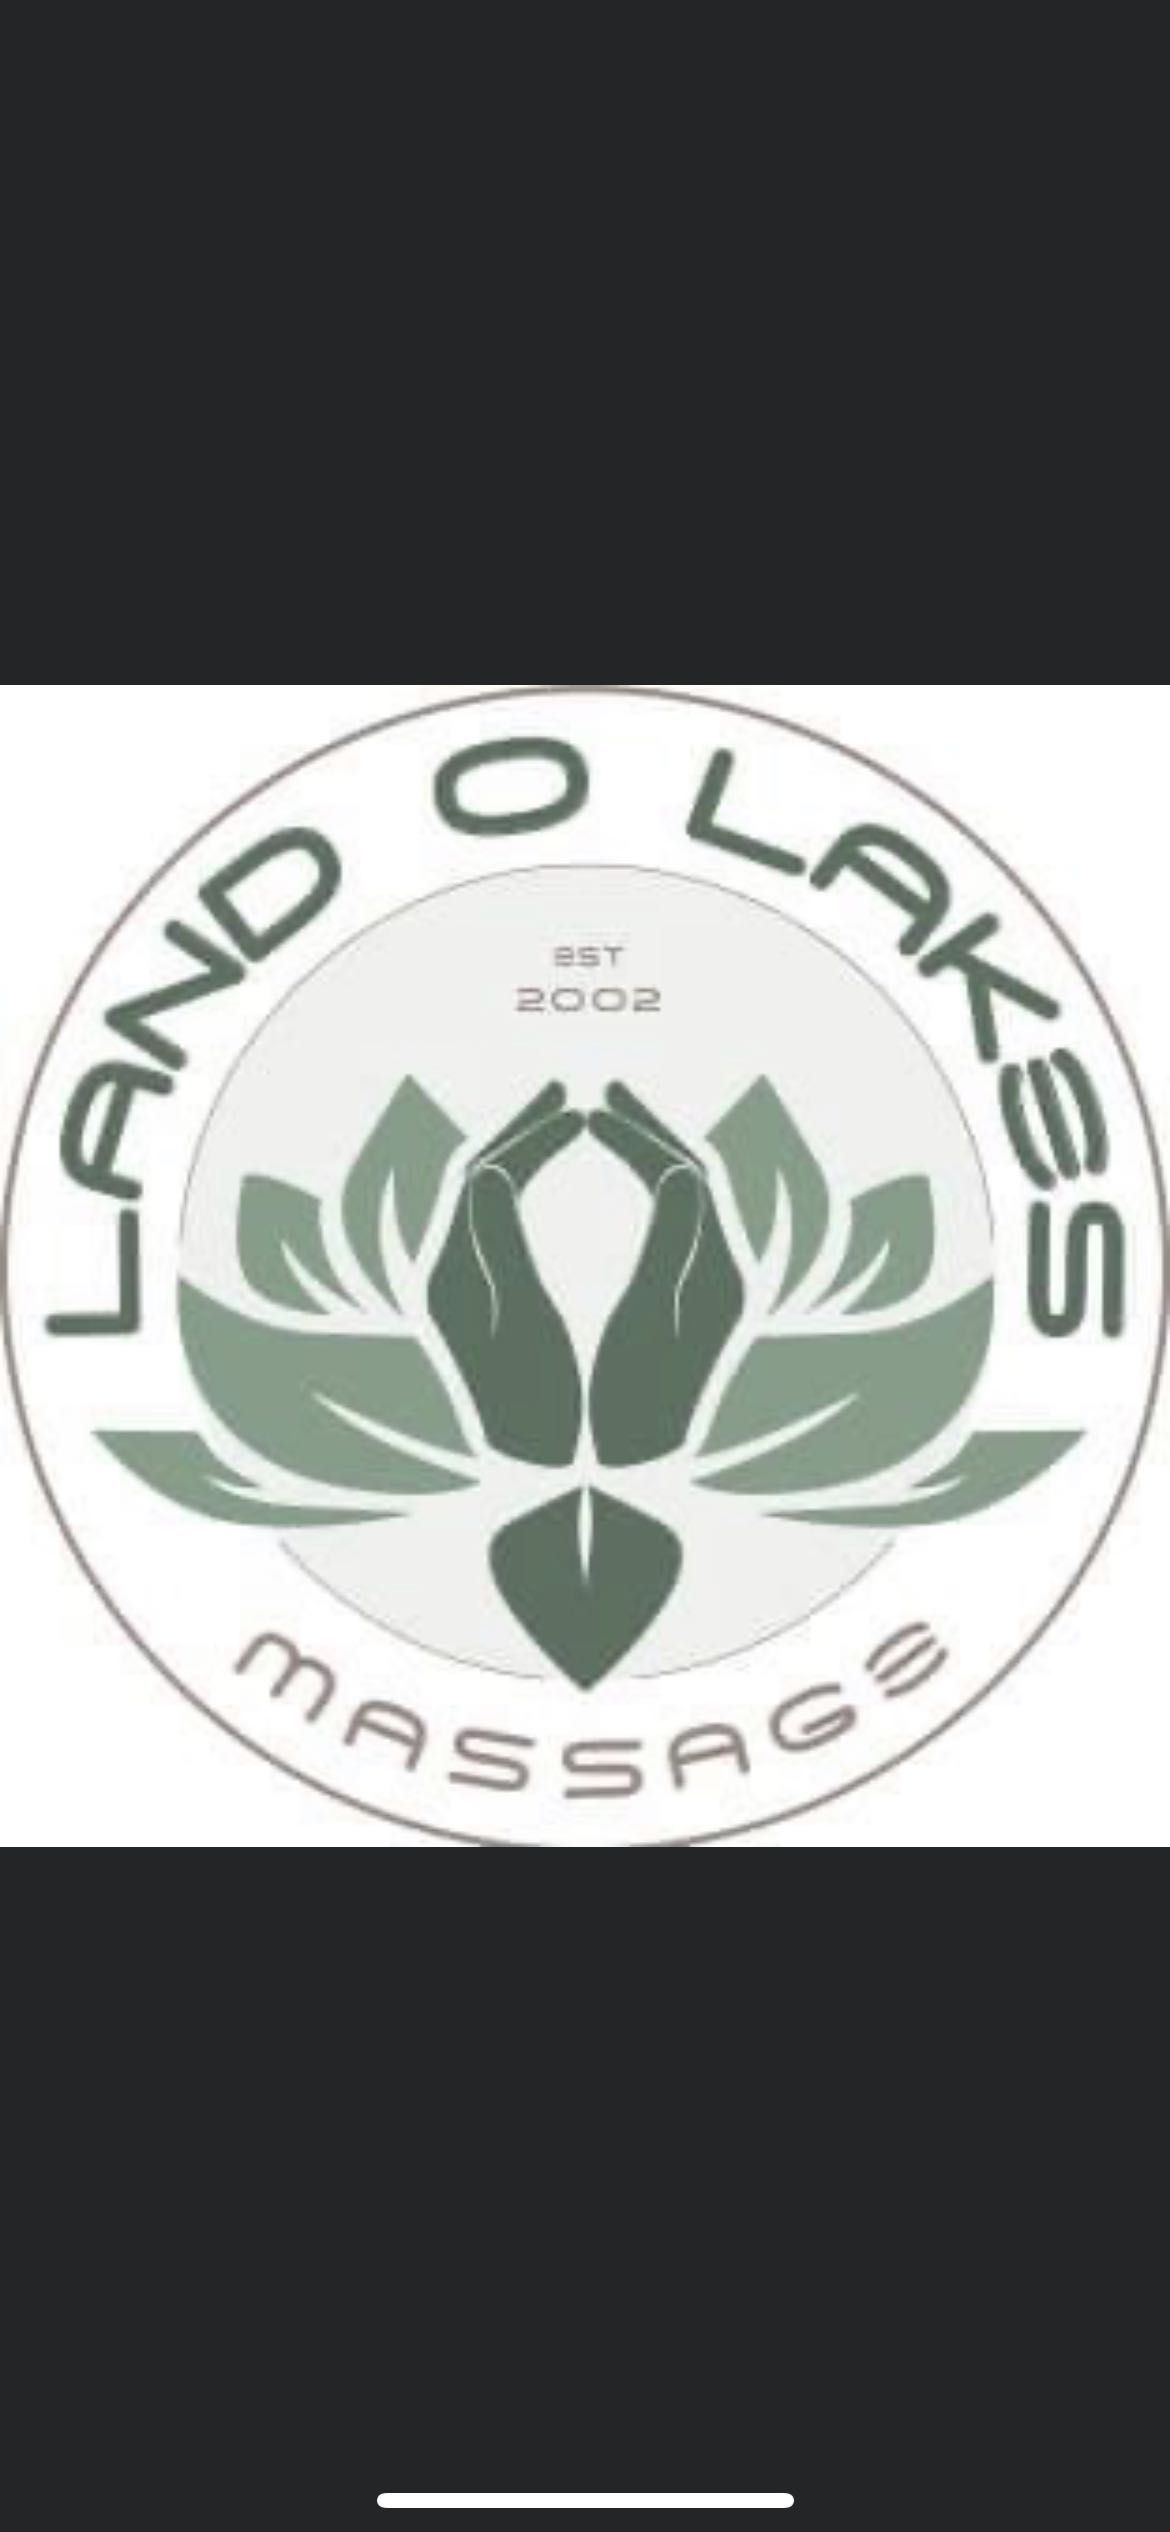 Land o Lakes massage, 3944 Lake Padgett drive suite 6, Land O Lakes, 34639